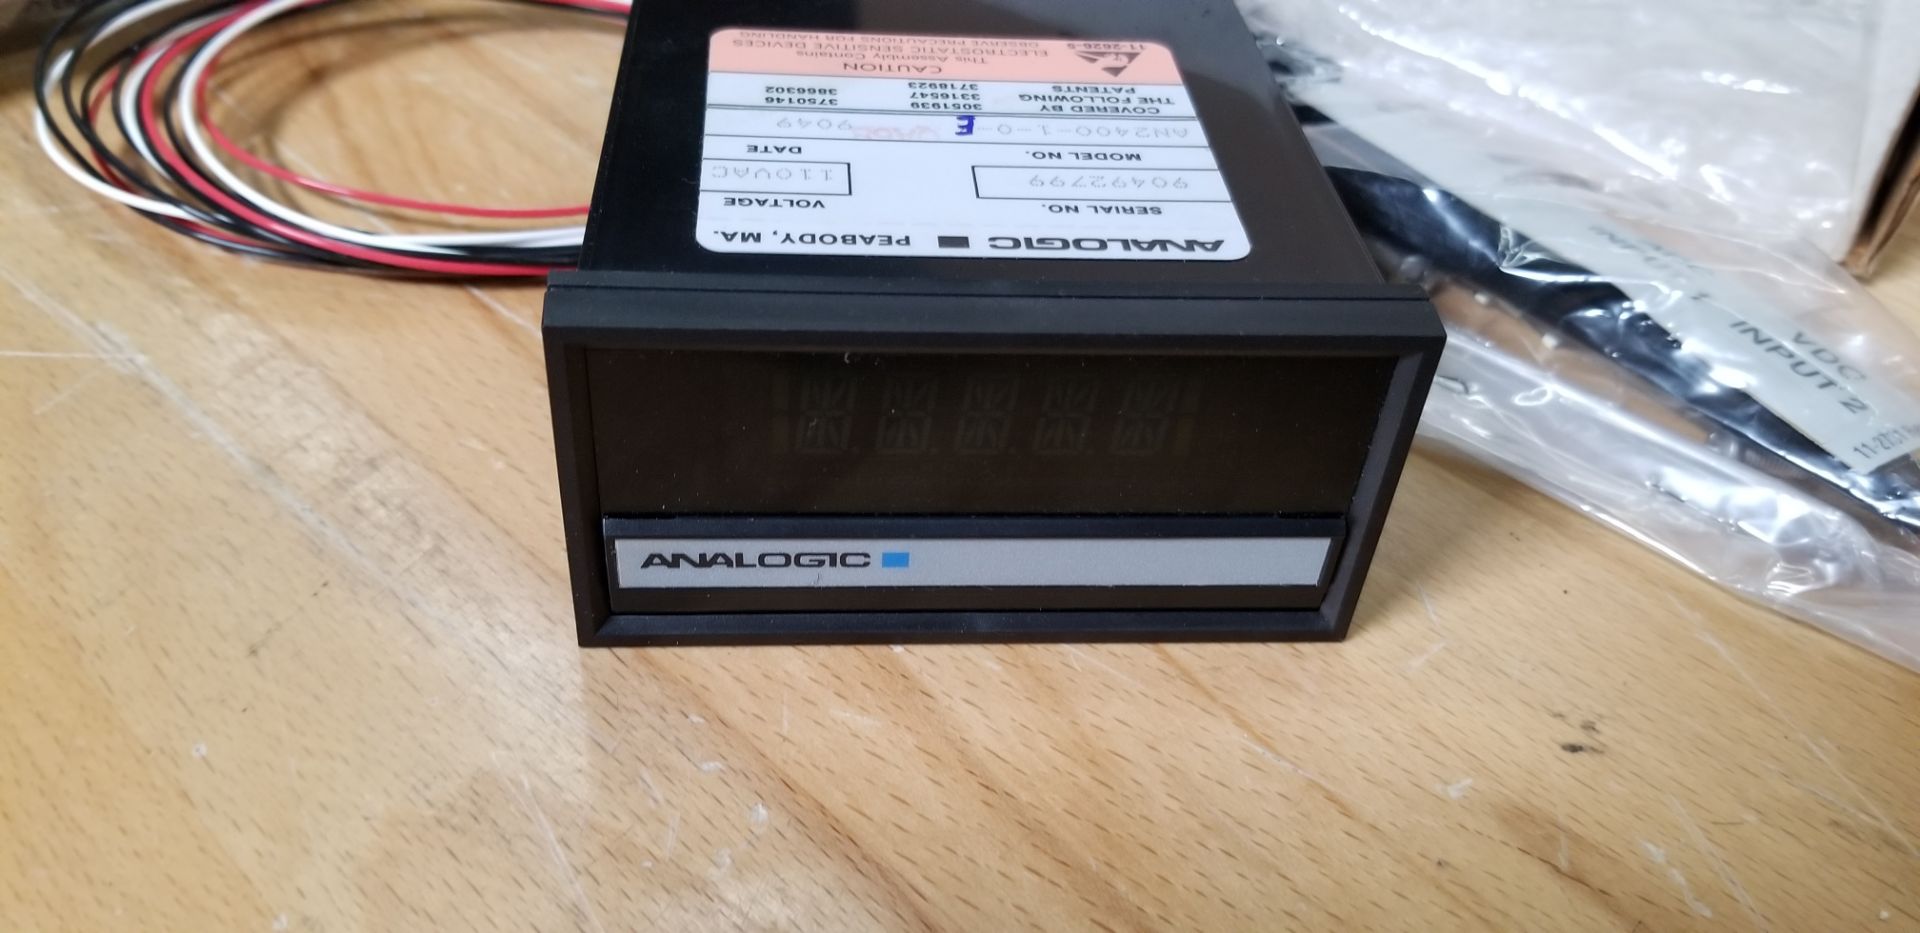 New Analogic Digital Panel Meter - Image 5 of 8